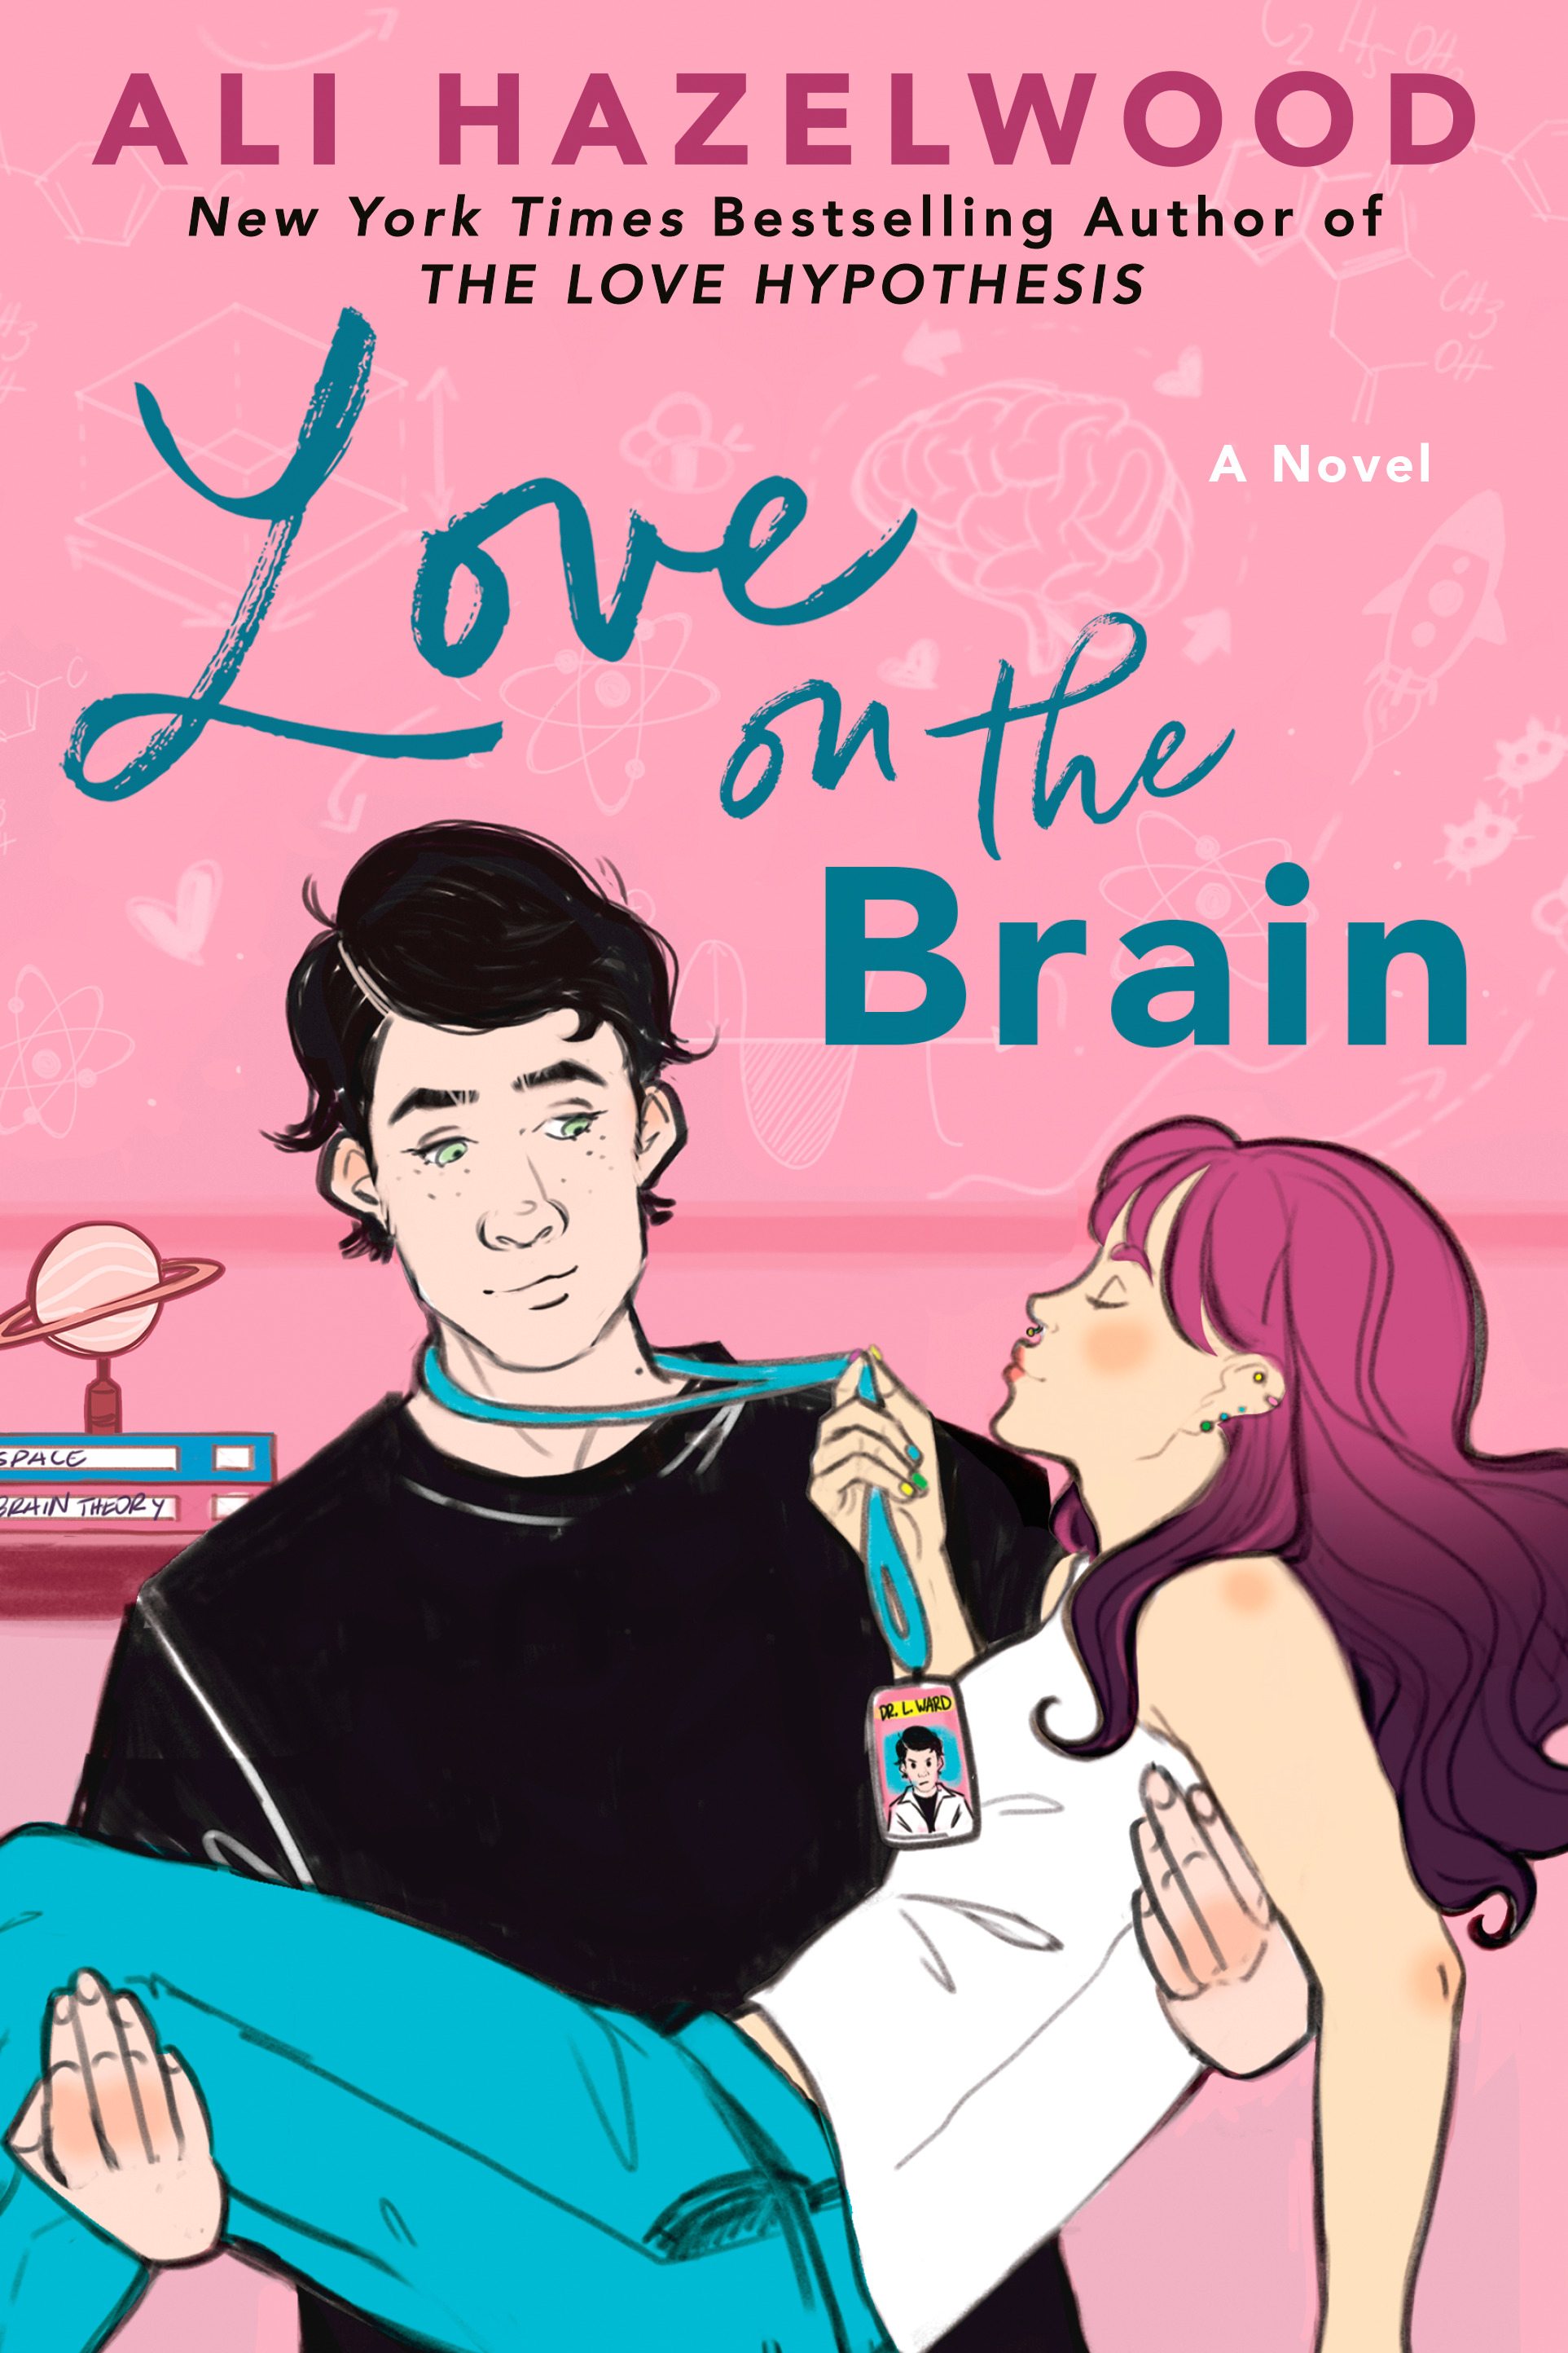 11. Love on the Brain by Ali Hazelwood